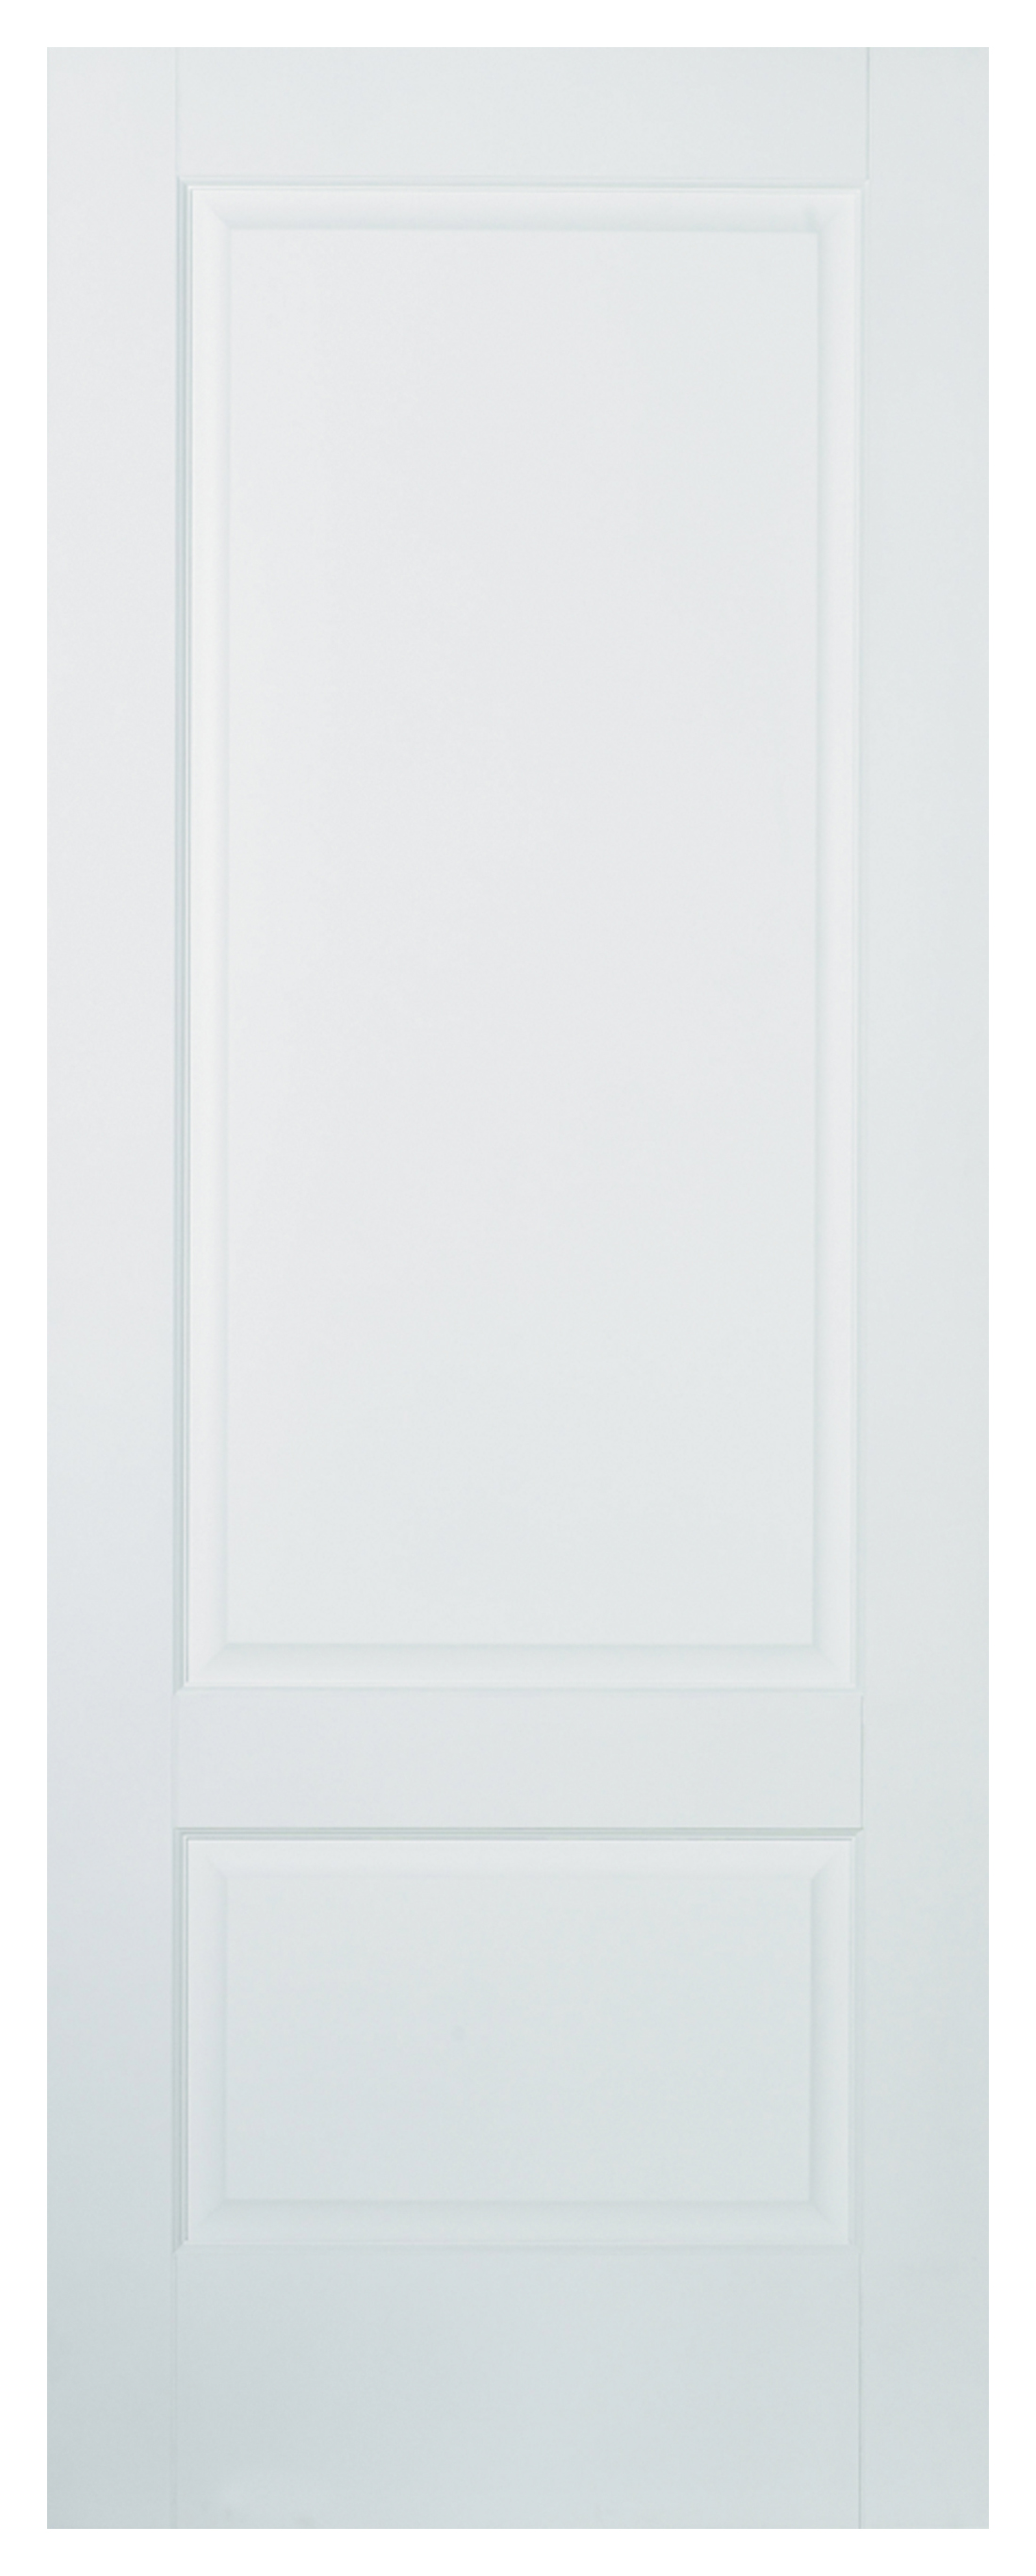 Image of LPD Internal Brooklyn 2 Panel Primed White Solid Core Door - 626 x 2040mm